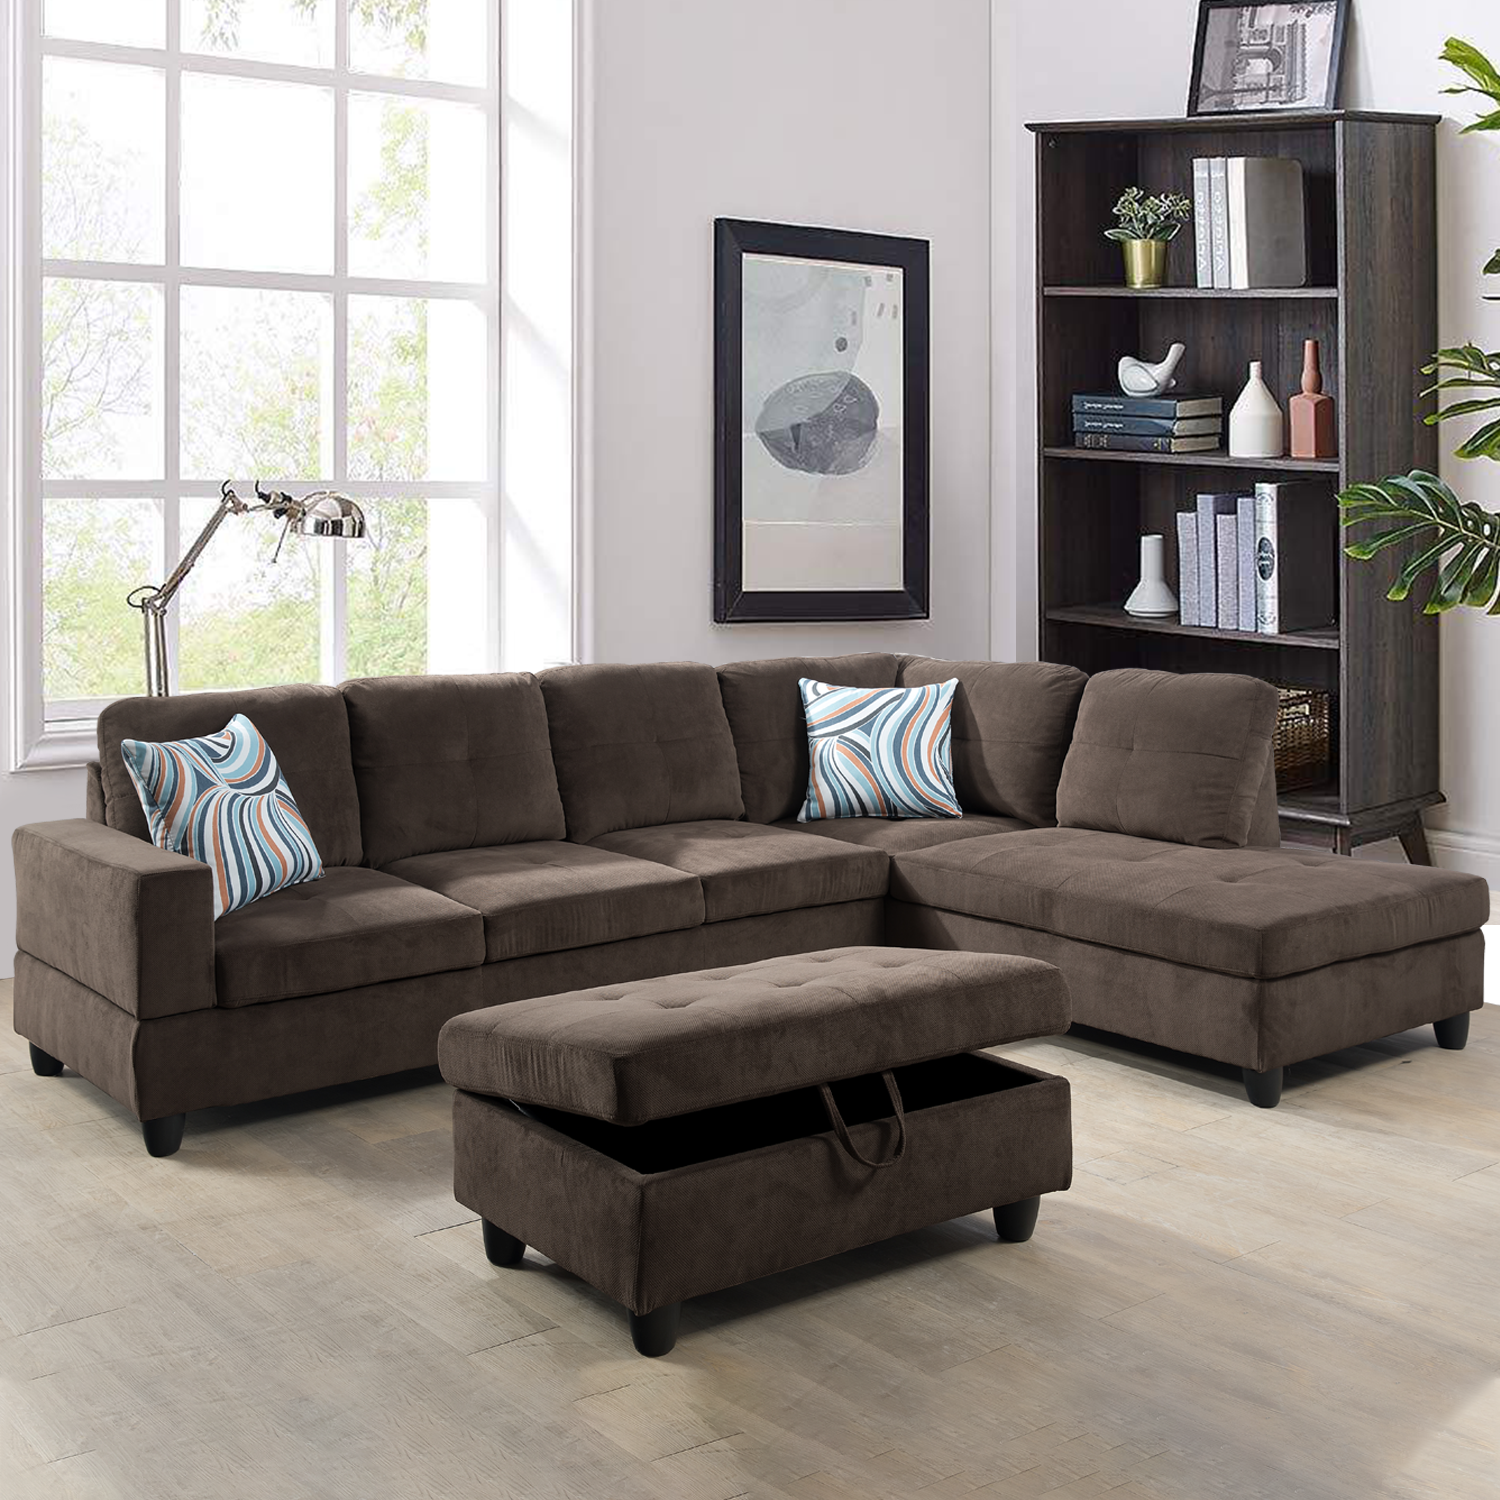 Ainehome Brown L-Shape Corduroy Fabric Combo Sofa Set